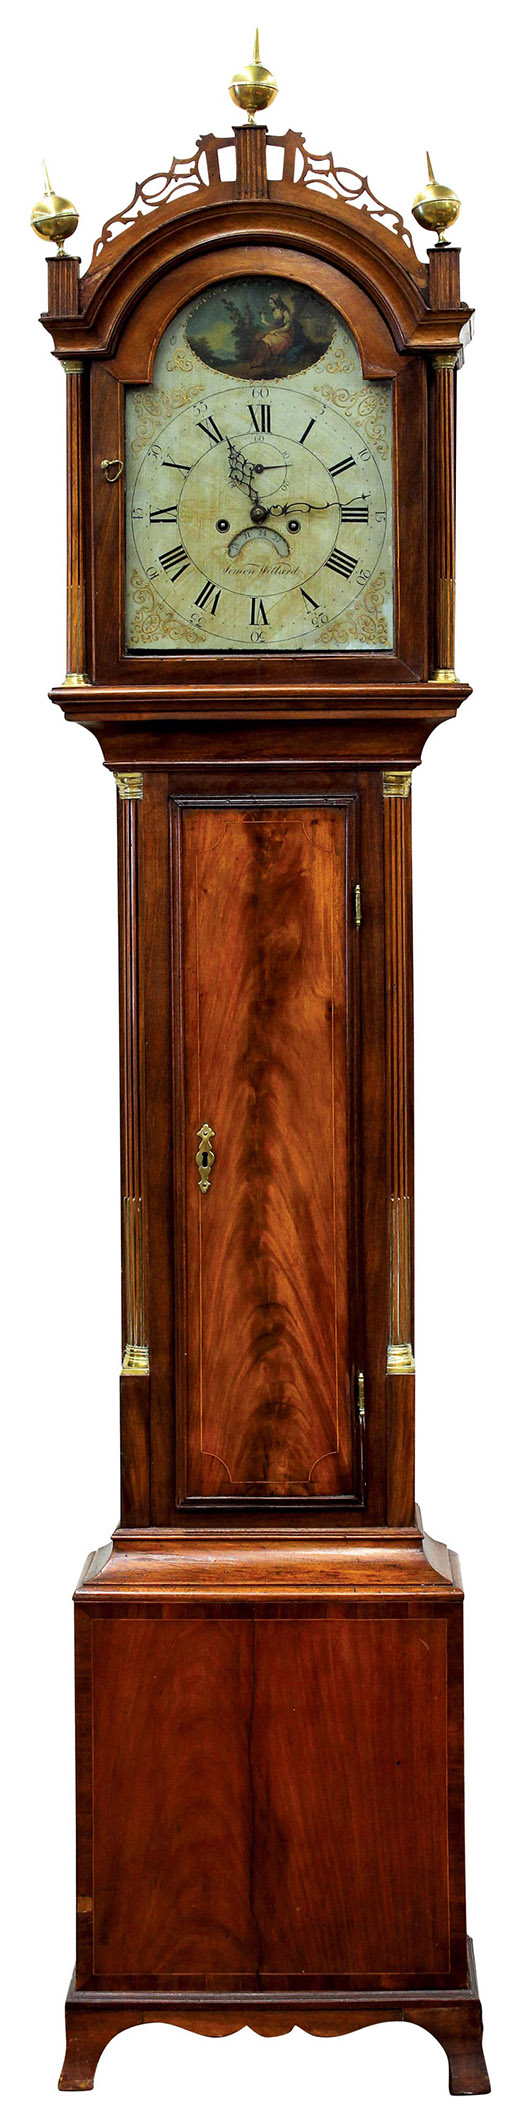 Simon Willard tall-case clock. Clars Auction Gallery image.